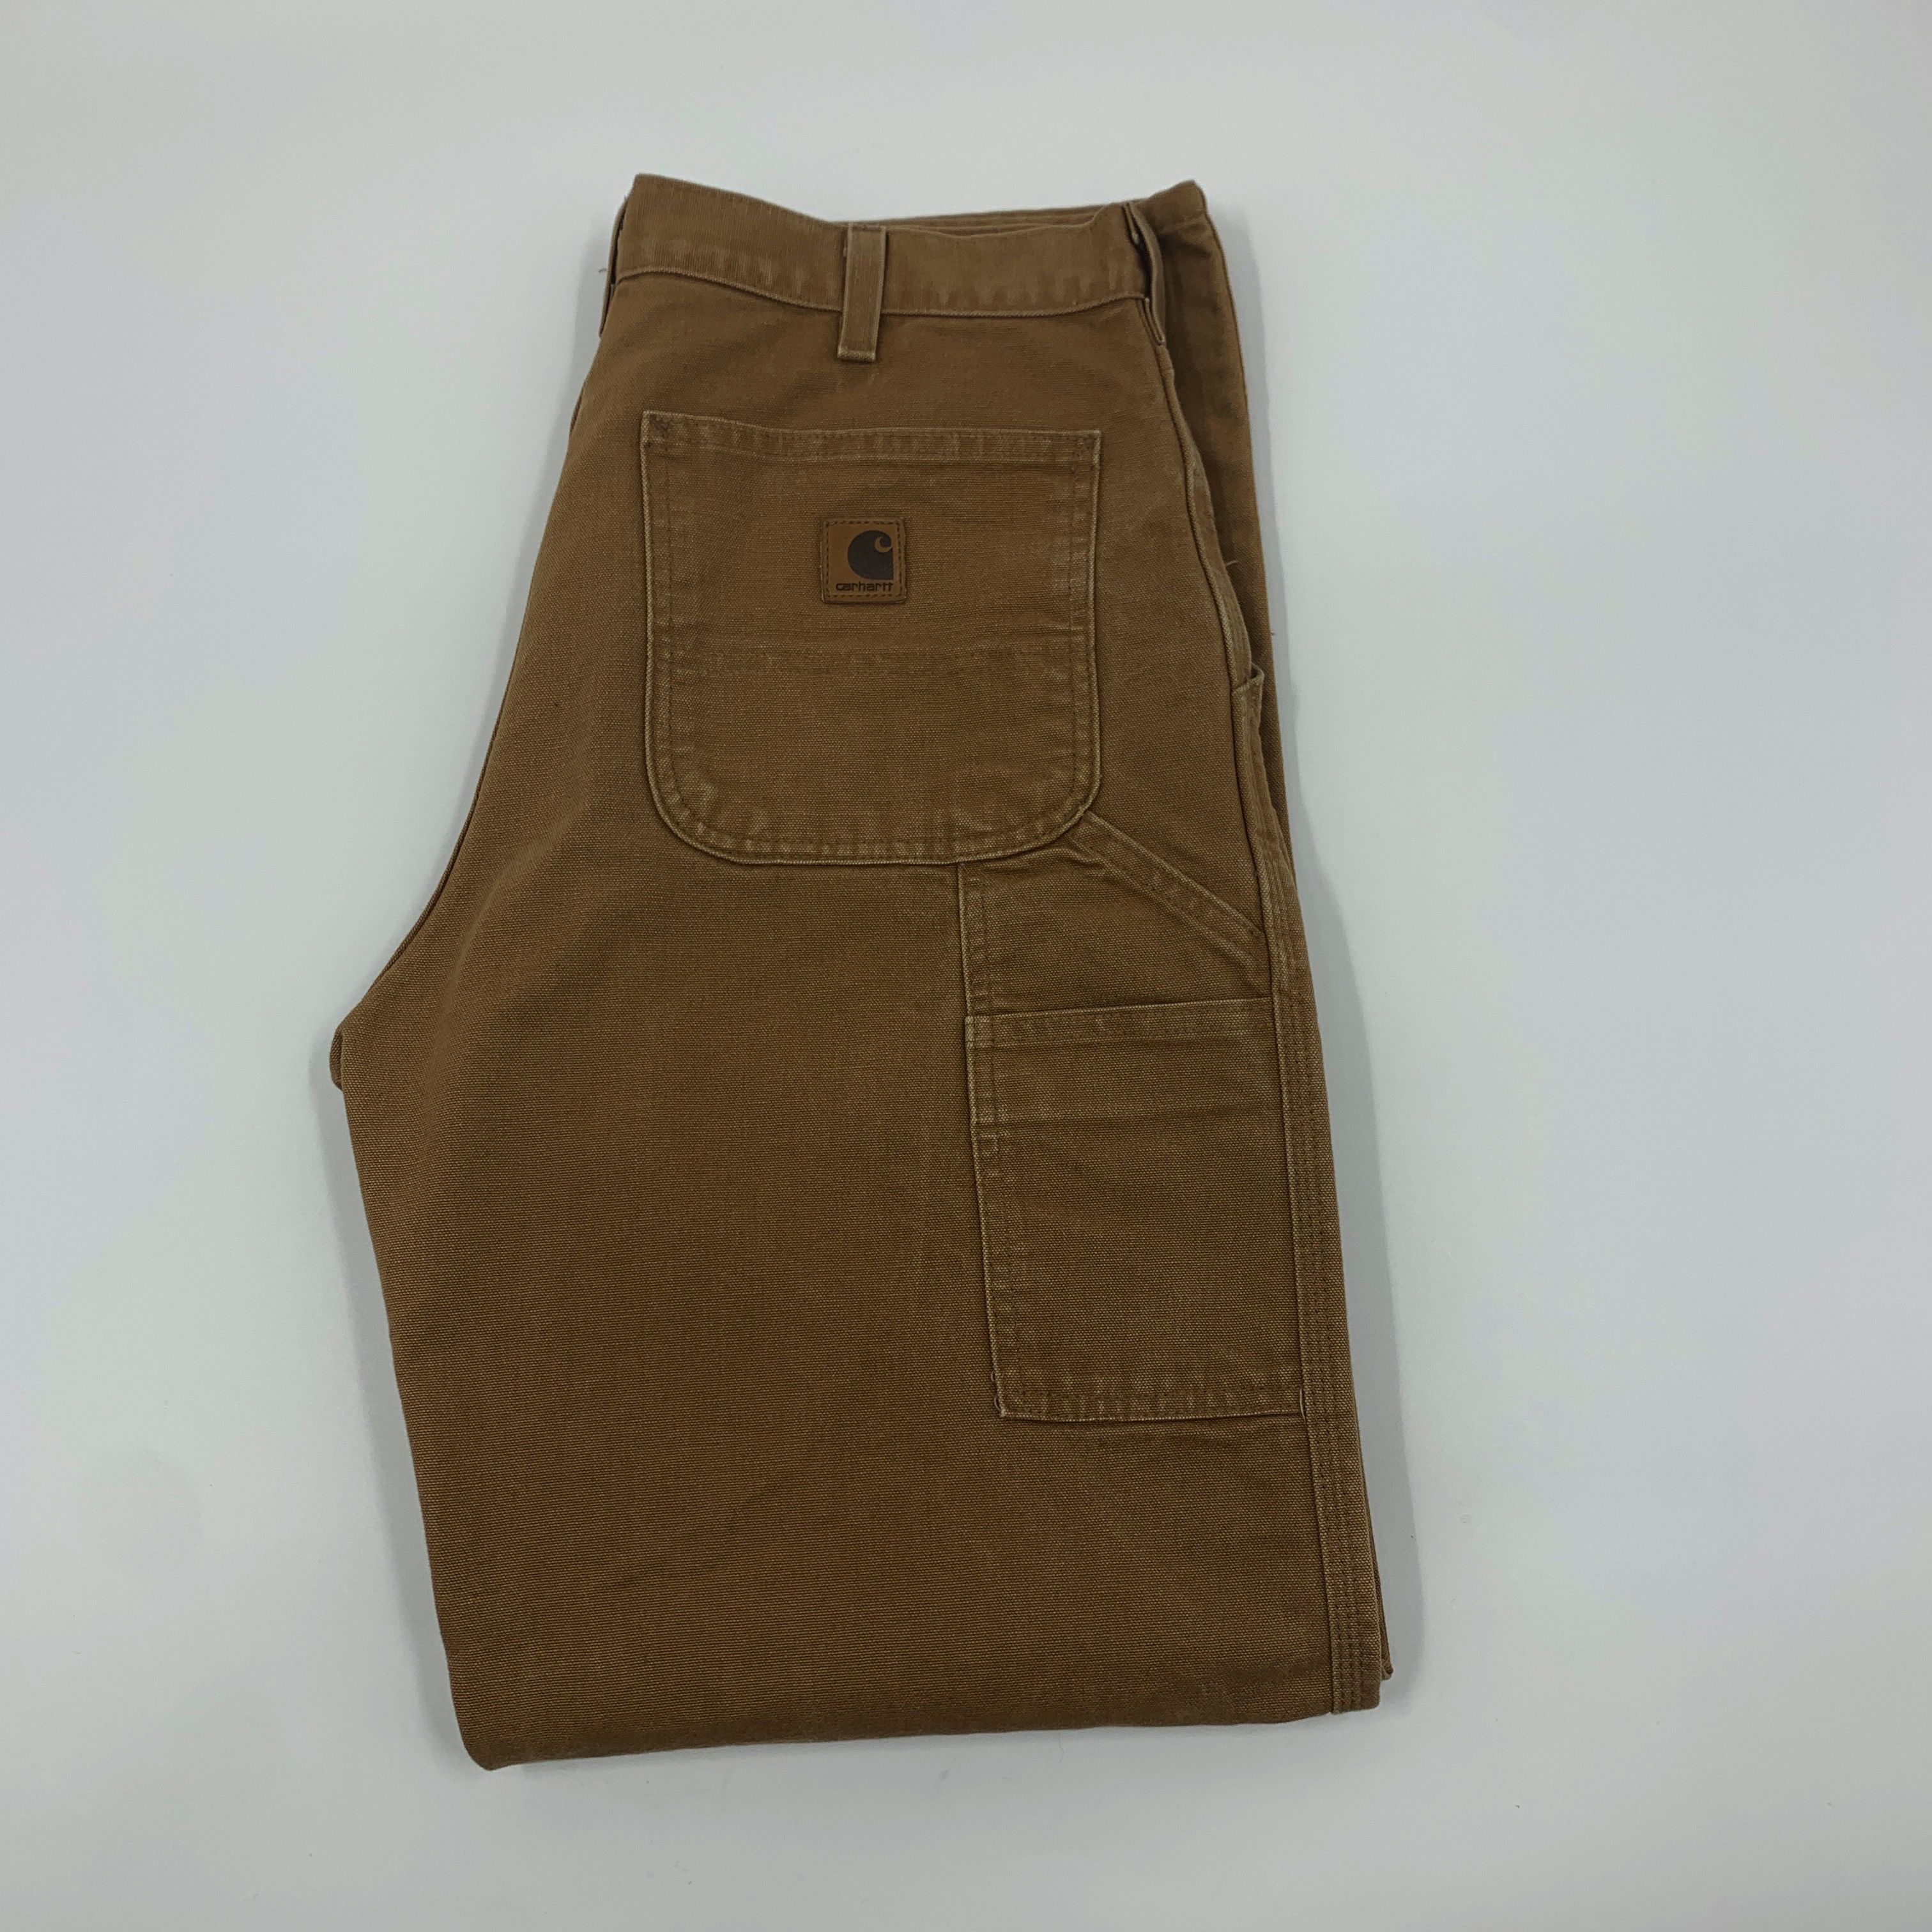 Vintage Carhartt B11 BRN pants size 33x34 Size US 33 - 1 Preview